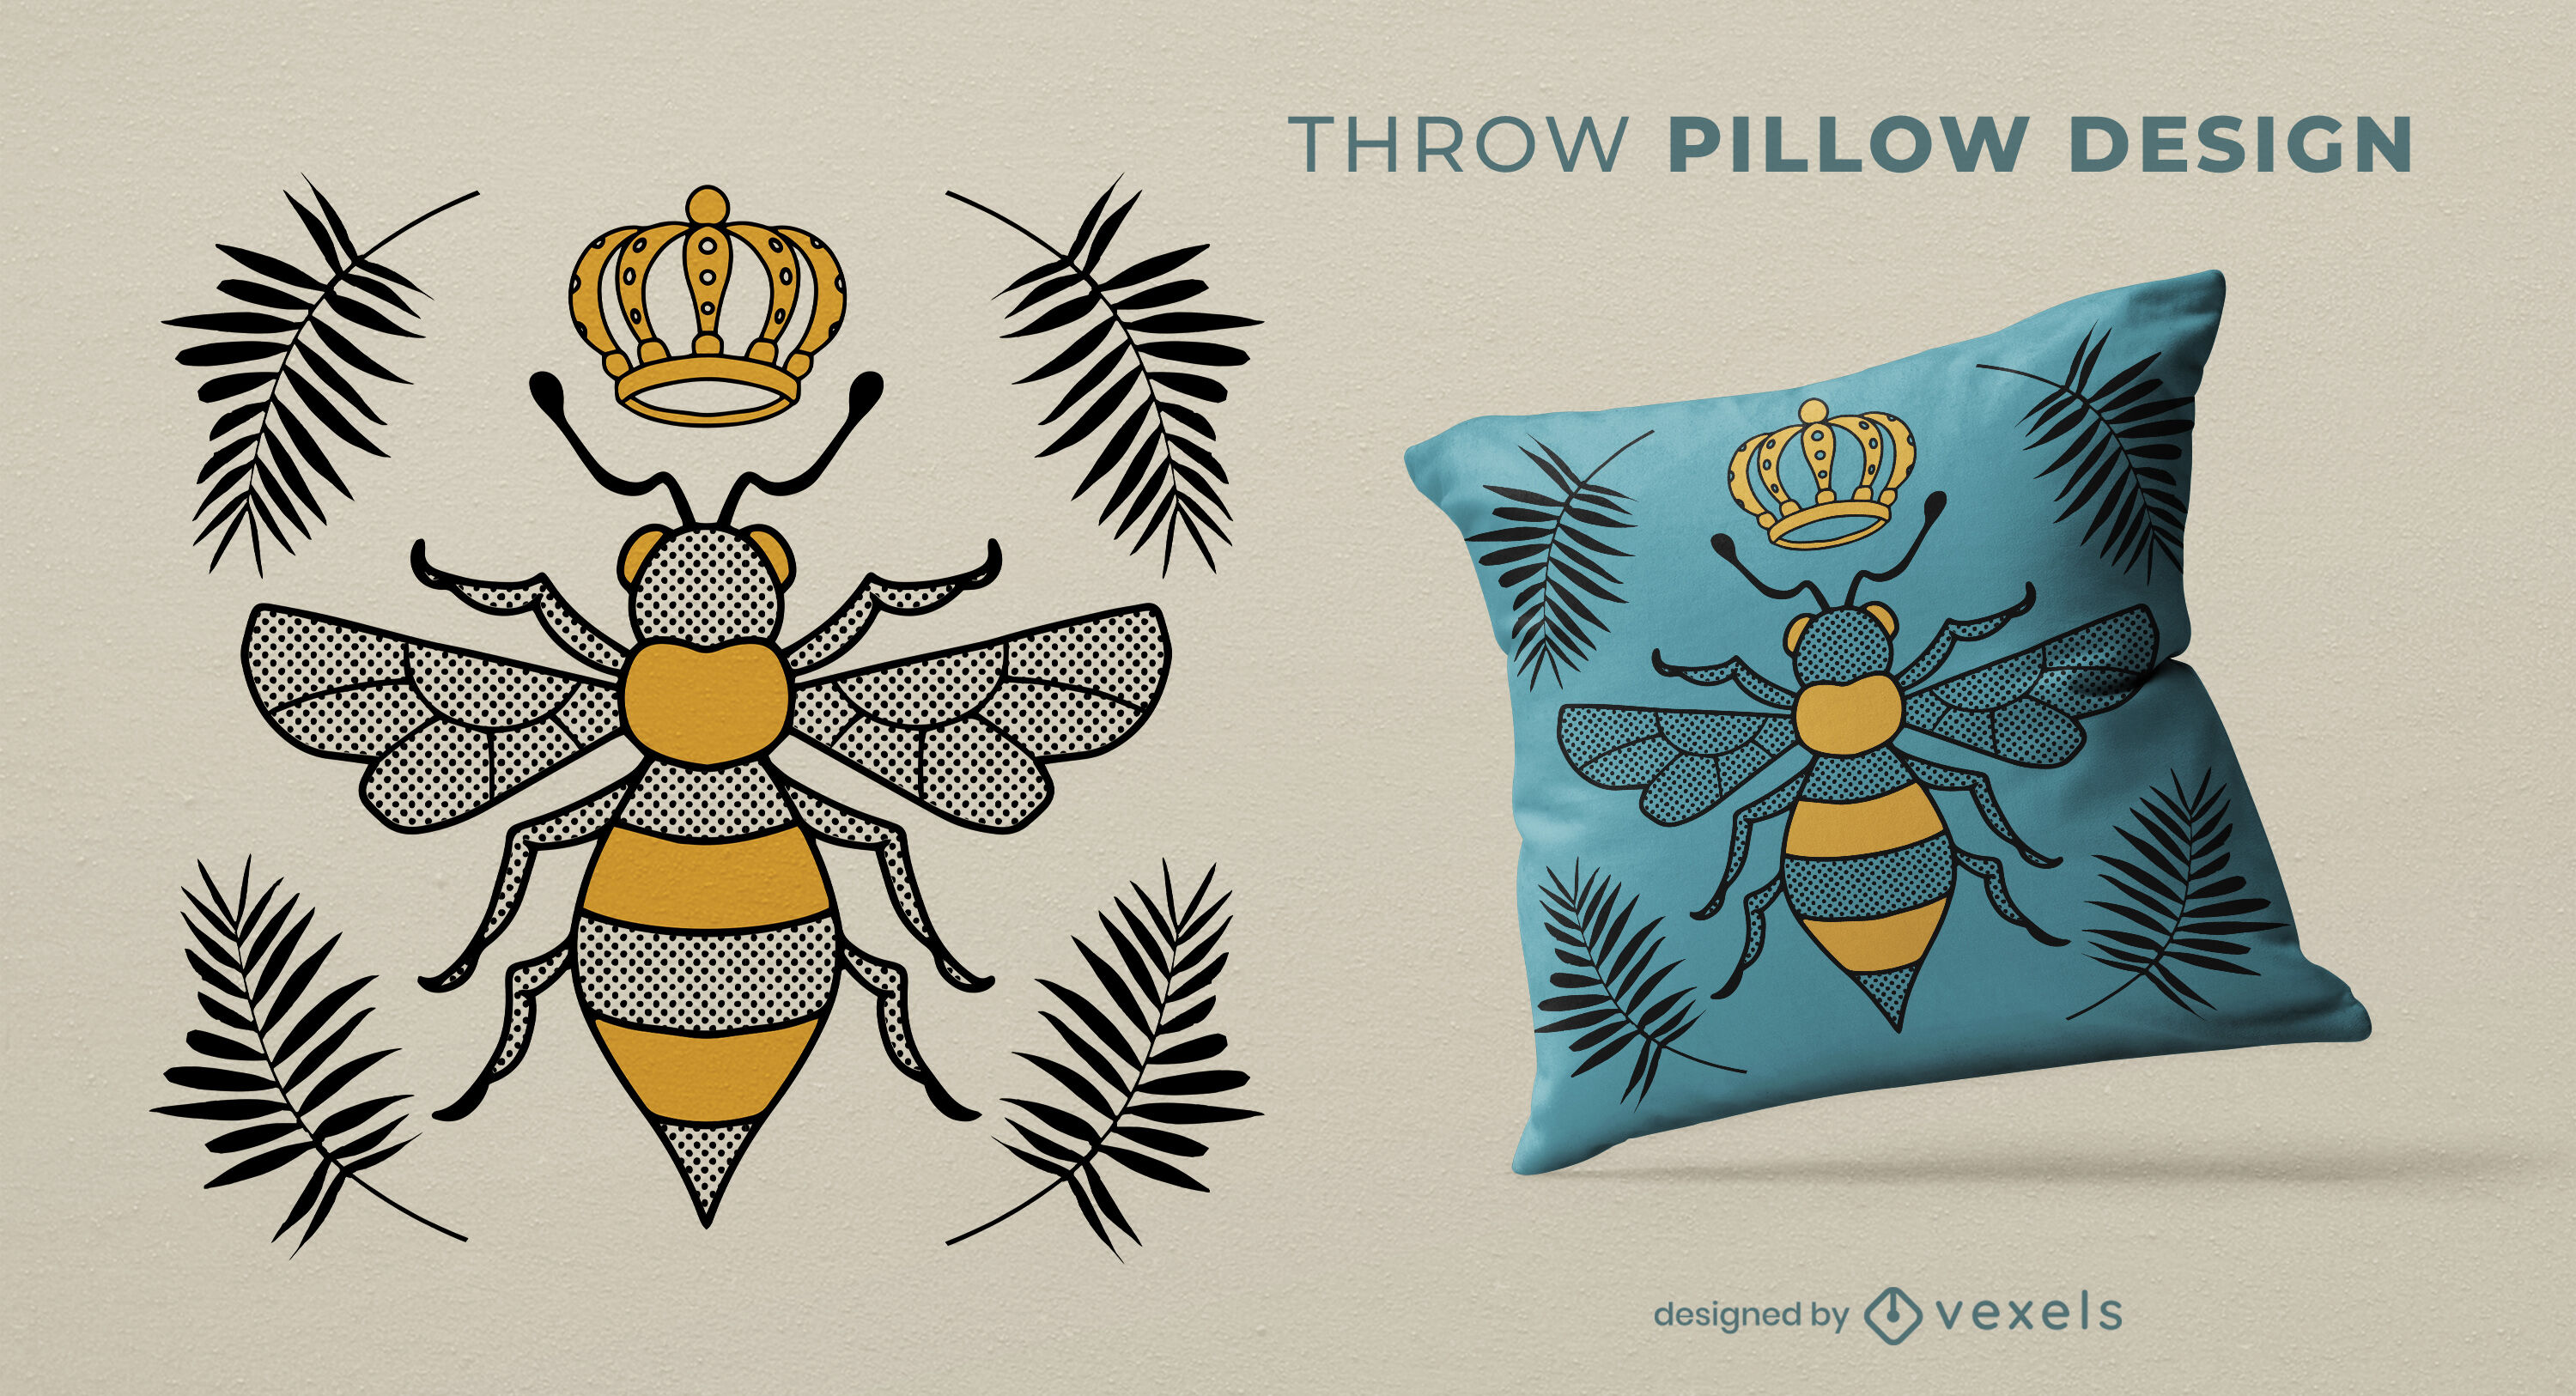 Queen bee throw pillow design